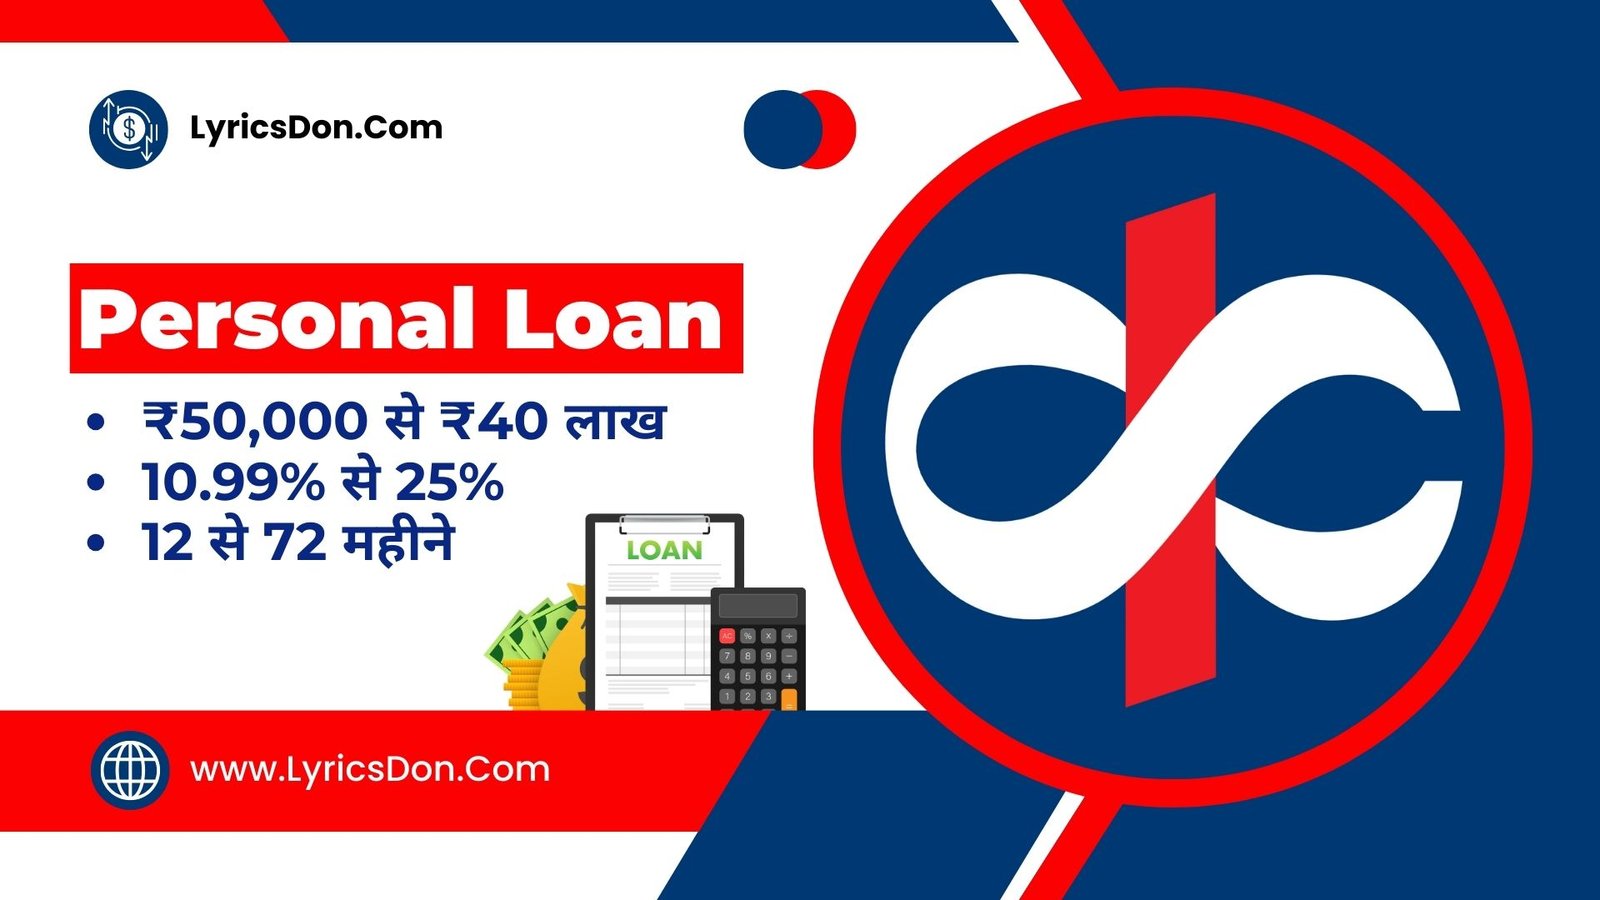 Kotak Mahindra Bank Personal Loan Amount